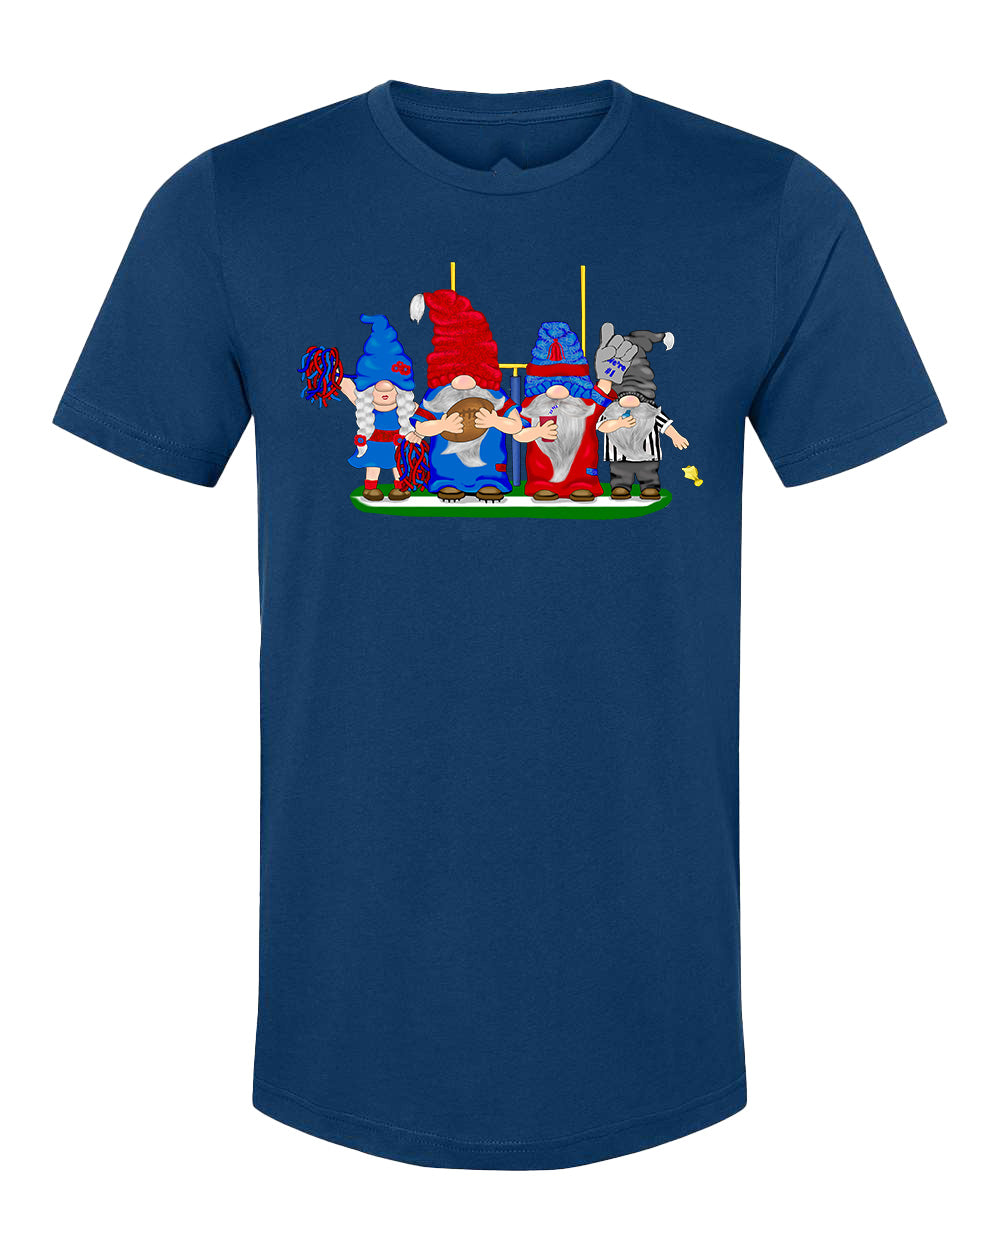 Steel Blue & Red Football Gnomes on Men's T-shirt (similar to Houston)